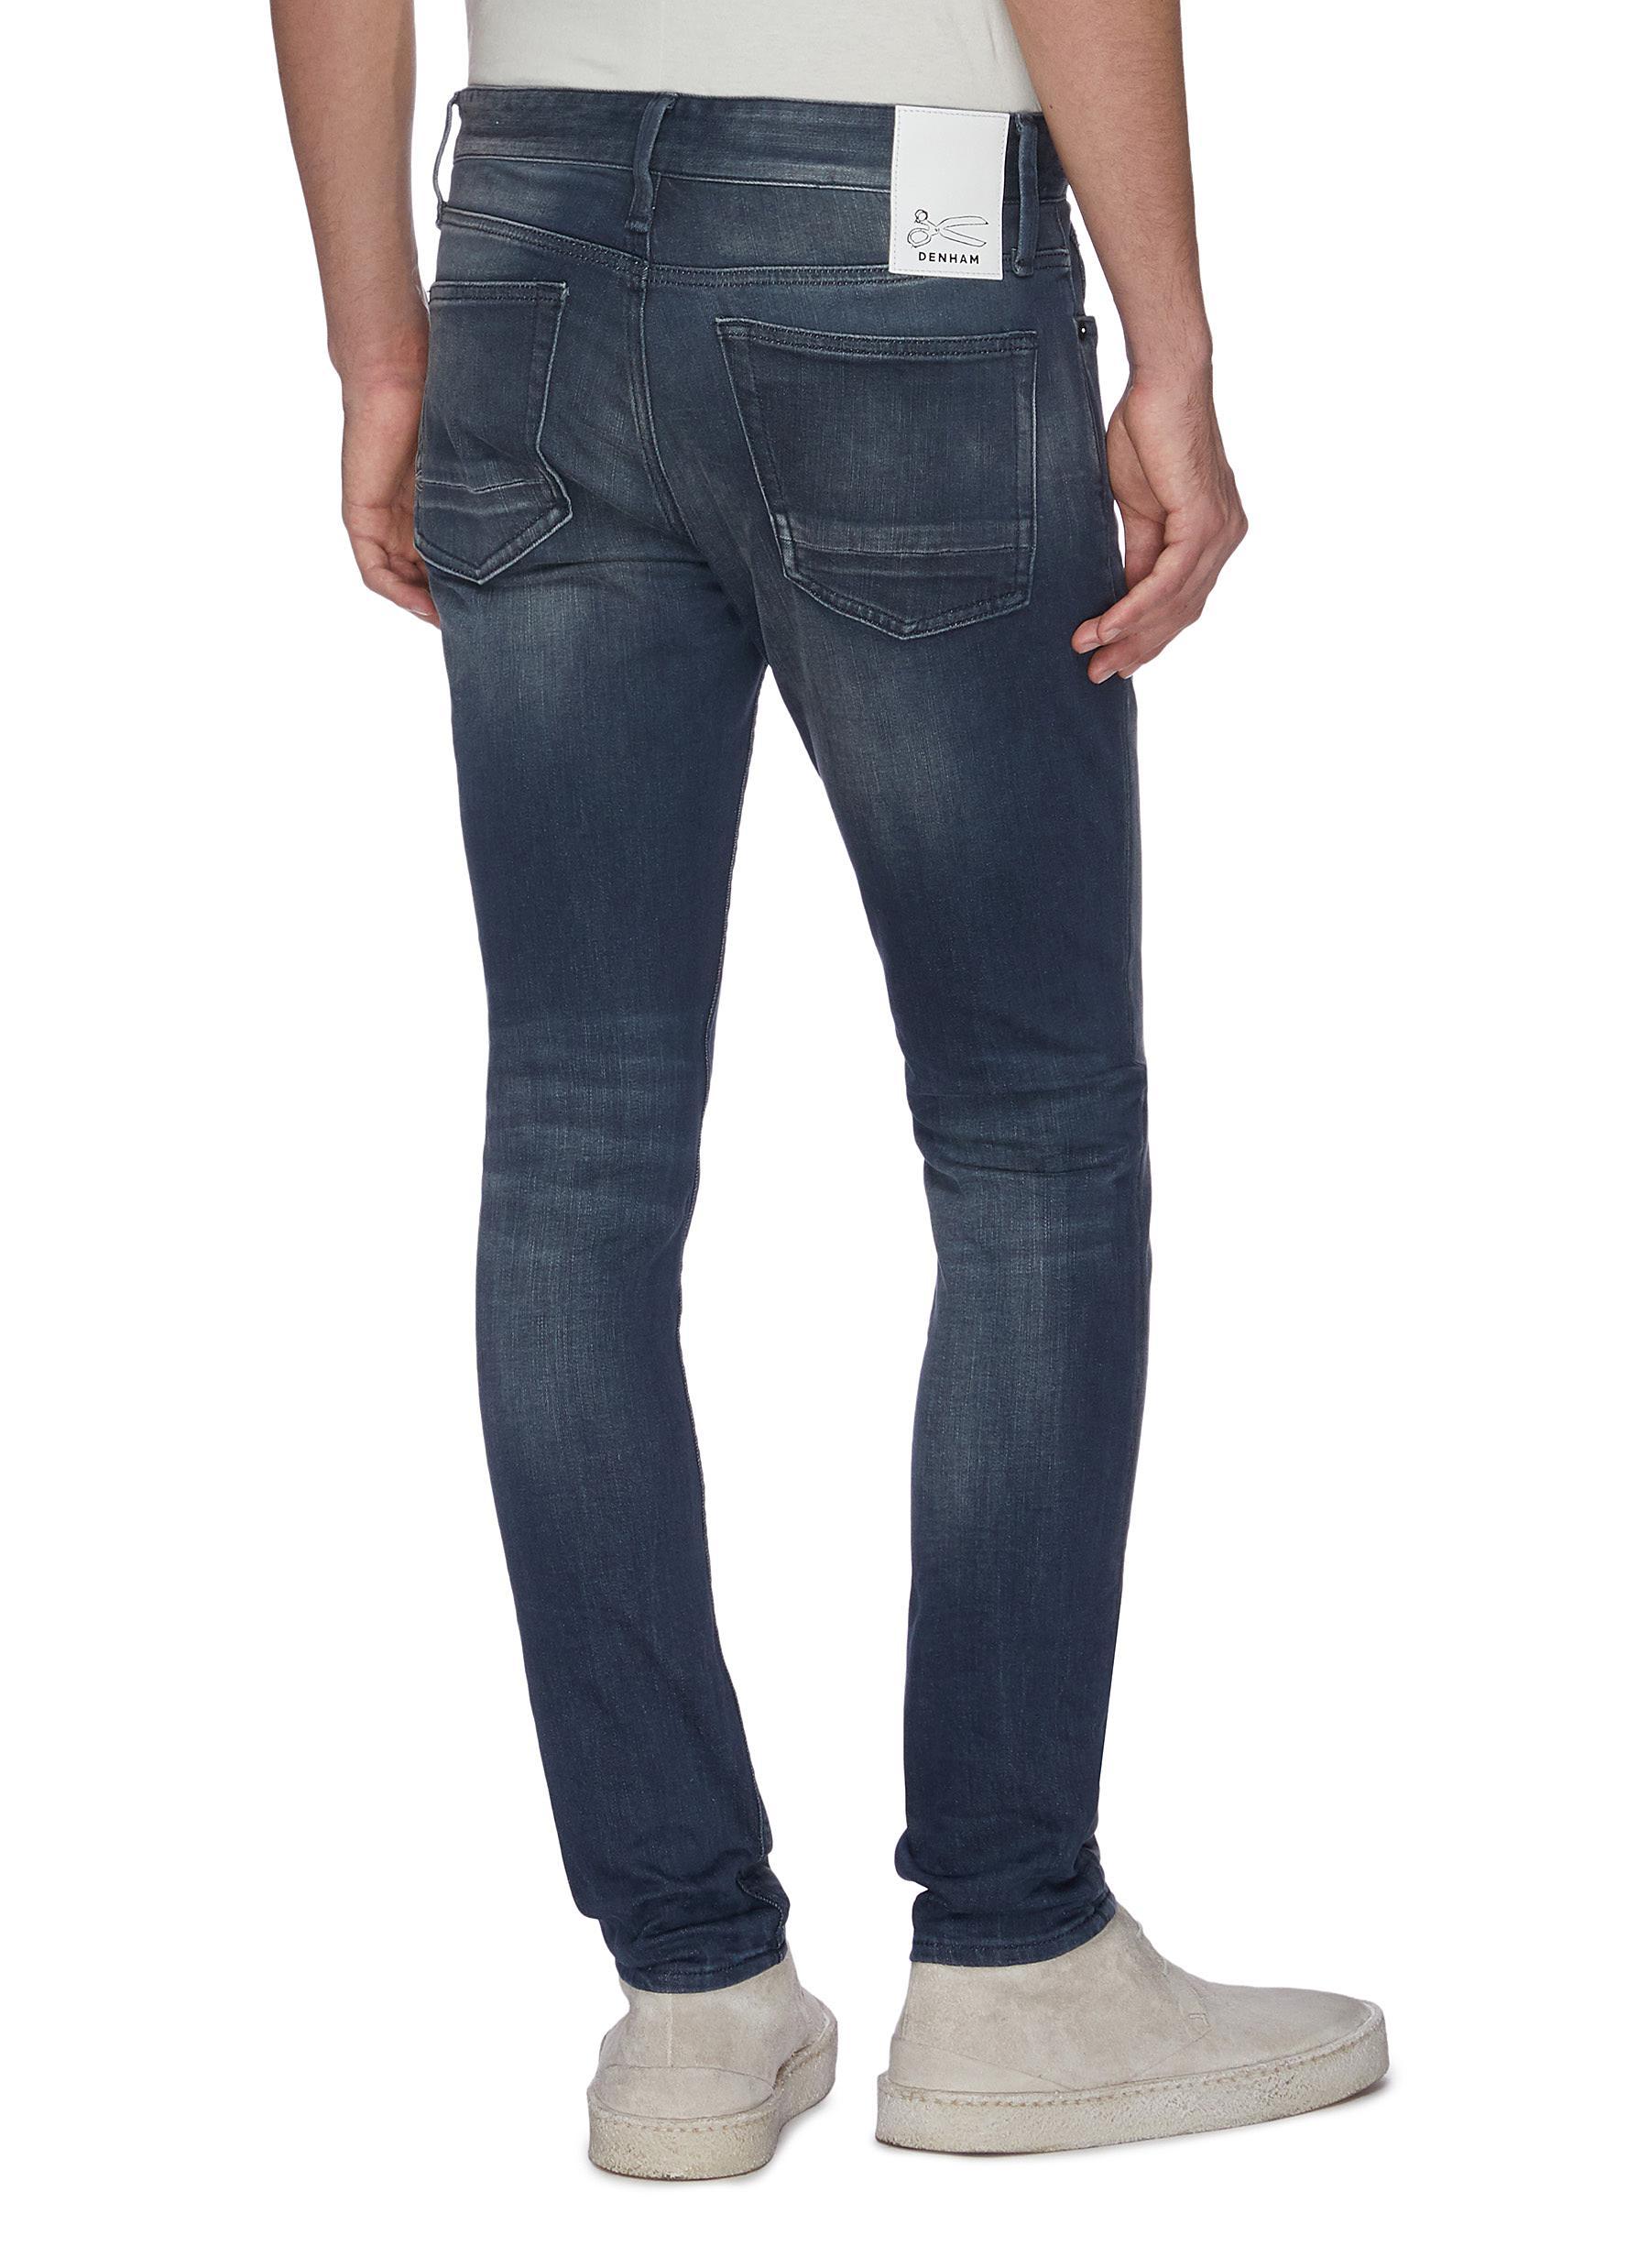 Denham Denim 'bolt Wlrock' Skinny Jeans in Blue,Grey (Blue) for Men - Lyst